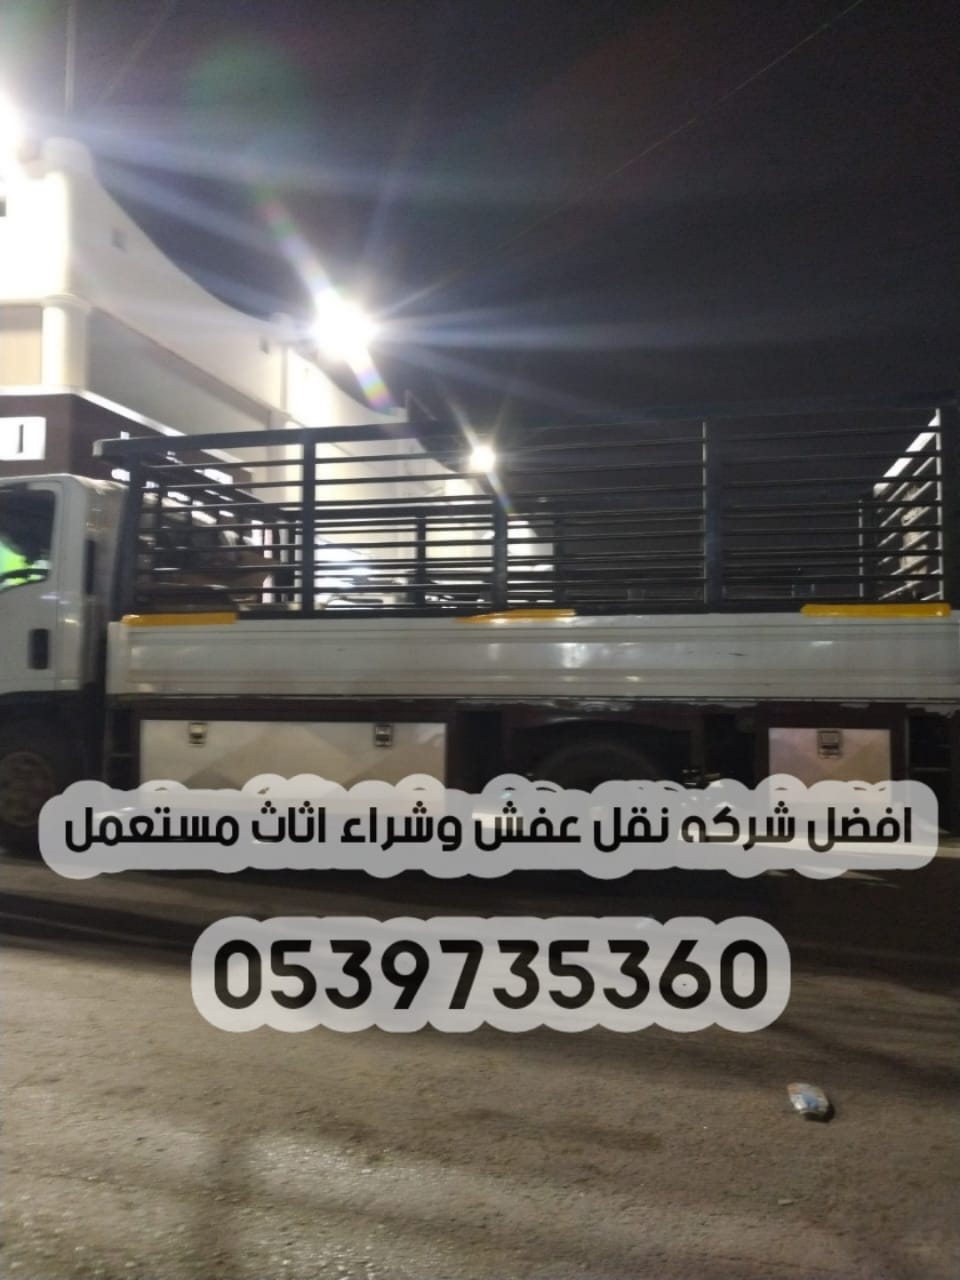 دينا نقل عفش داخل الرياض 0539735360 توصيل الاثاث مشاوير 171046514505651